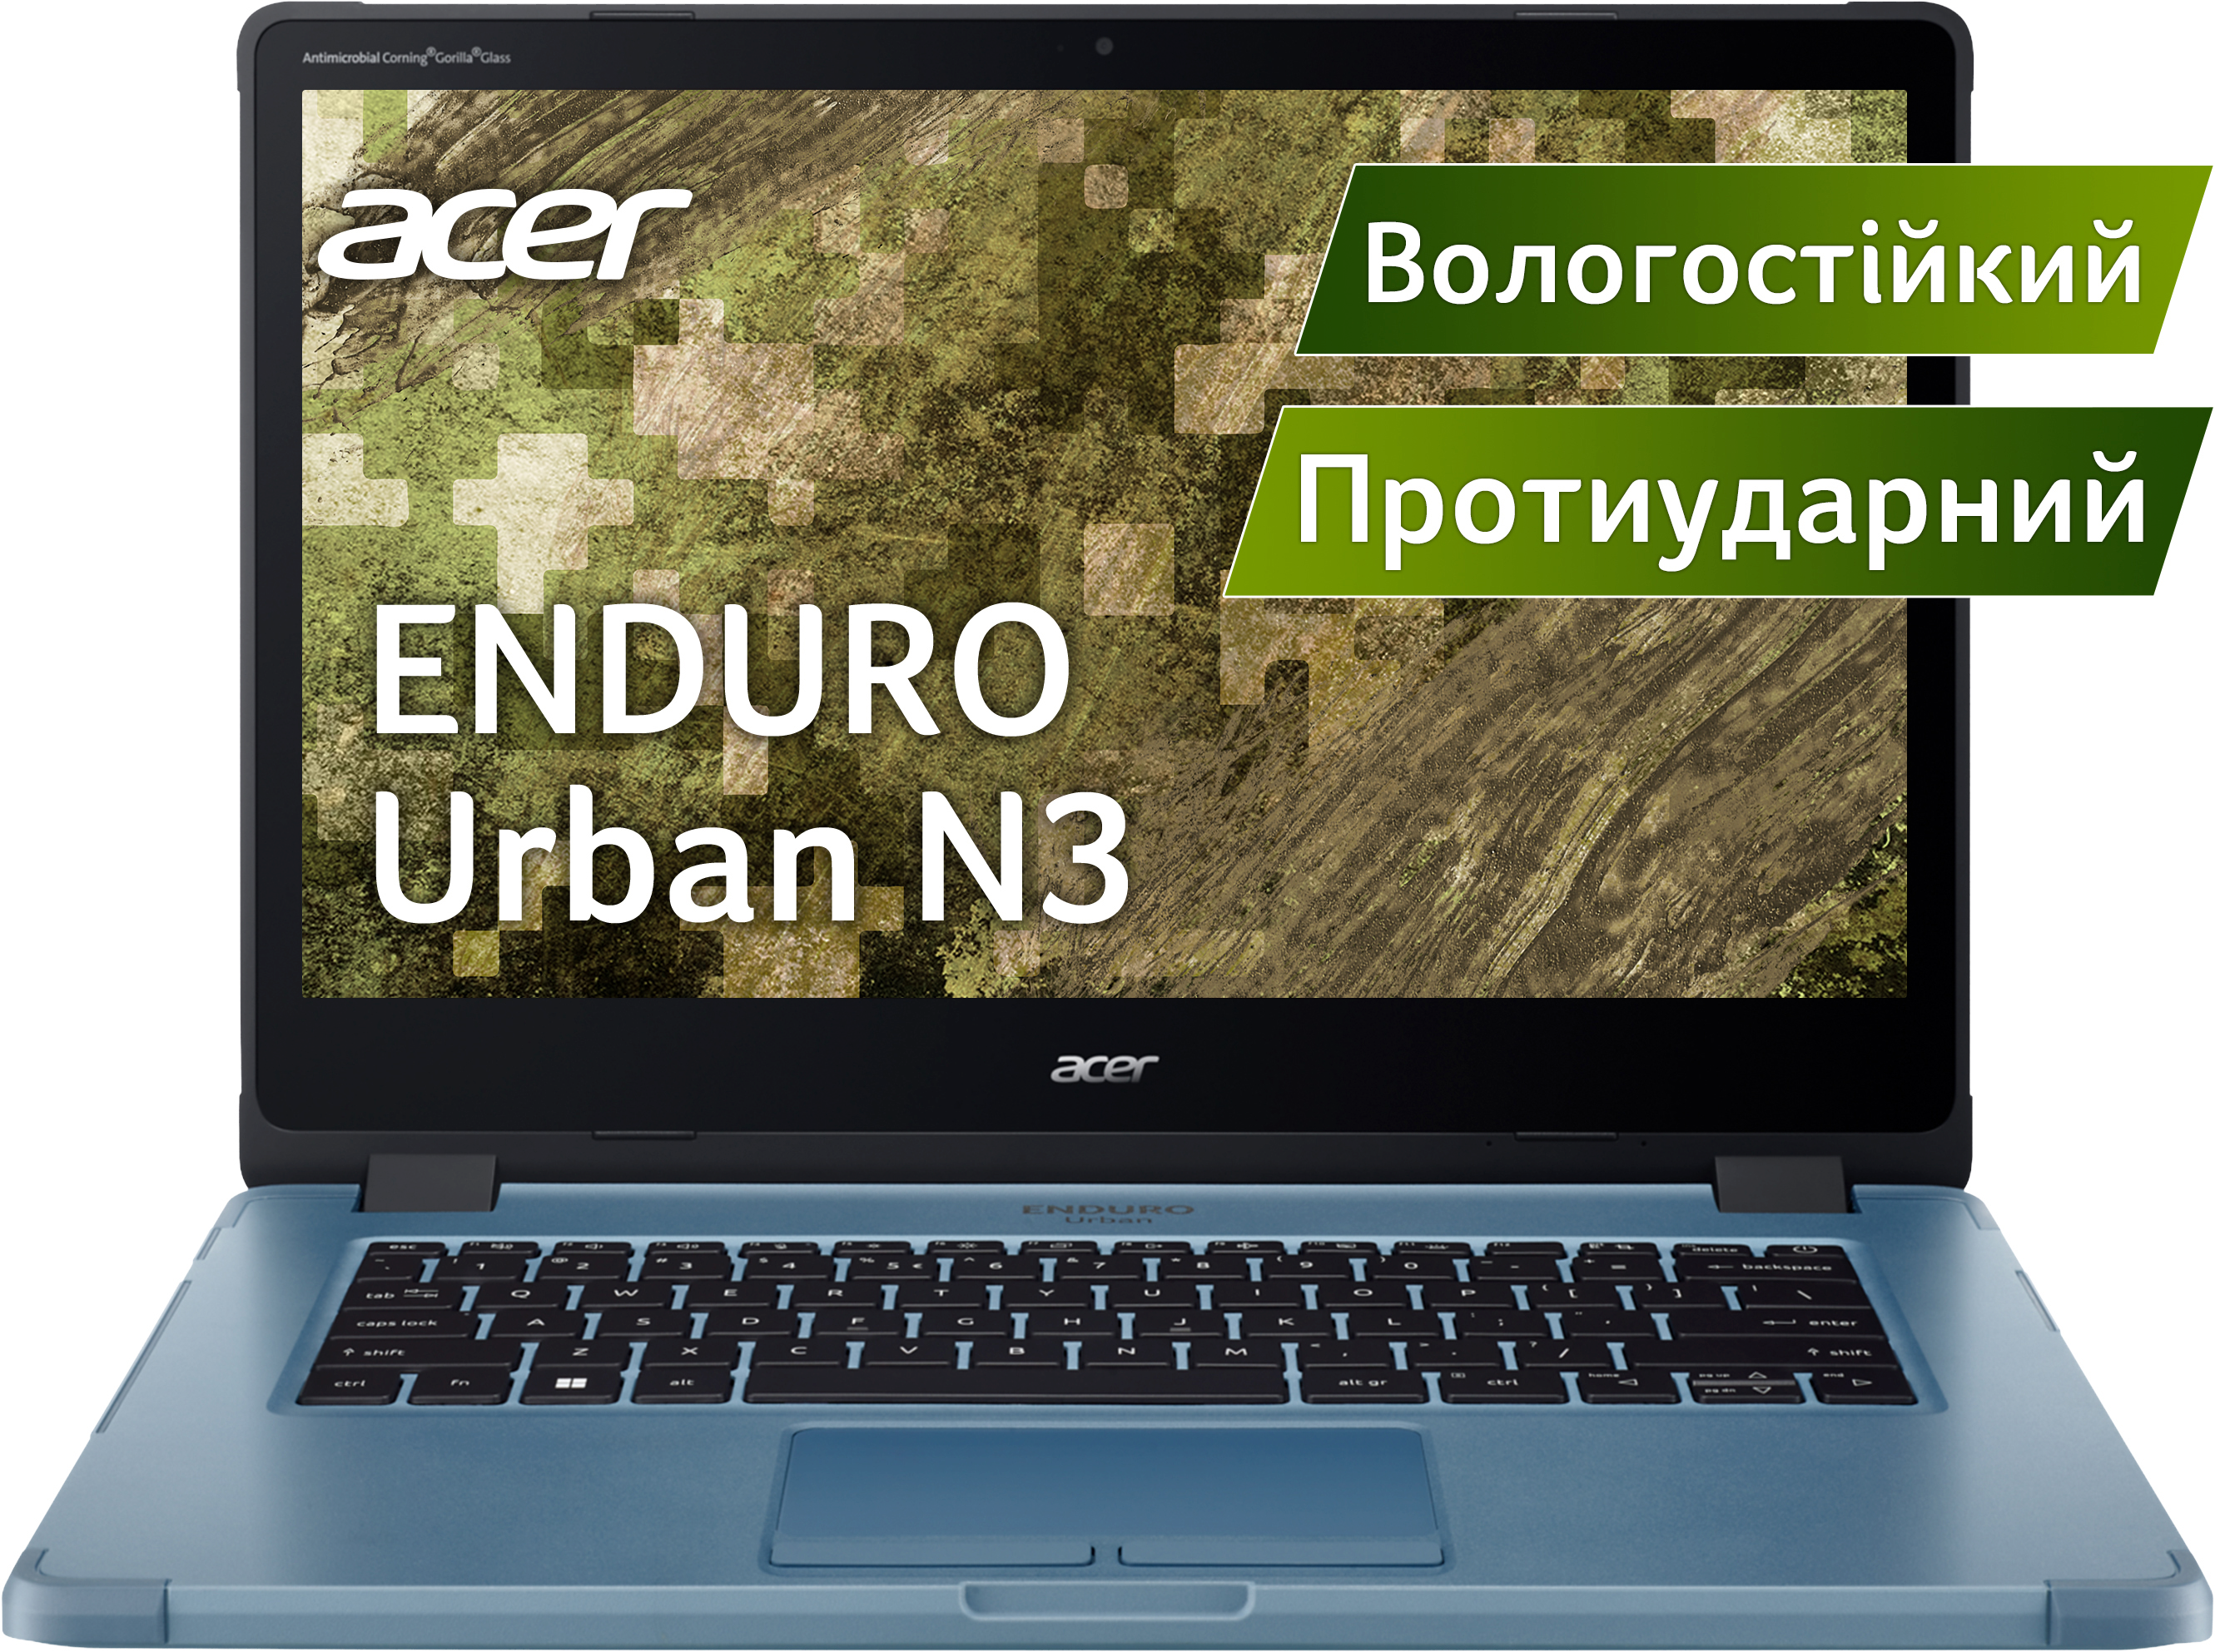 Ноутбук ACER Enduro Urban N3 Lite (NR.R28EU.008)фото2